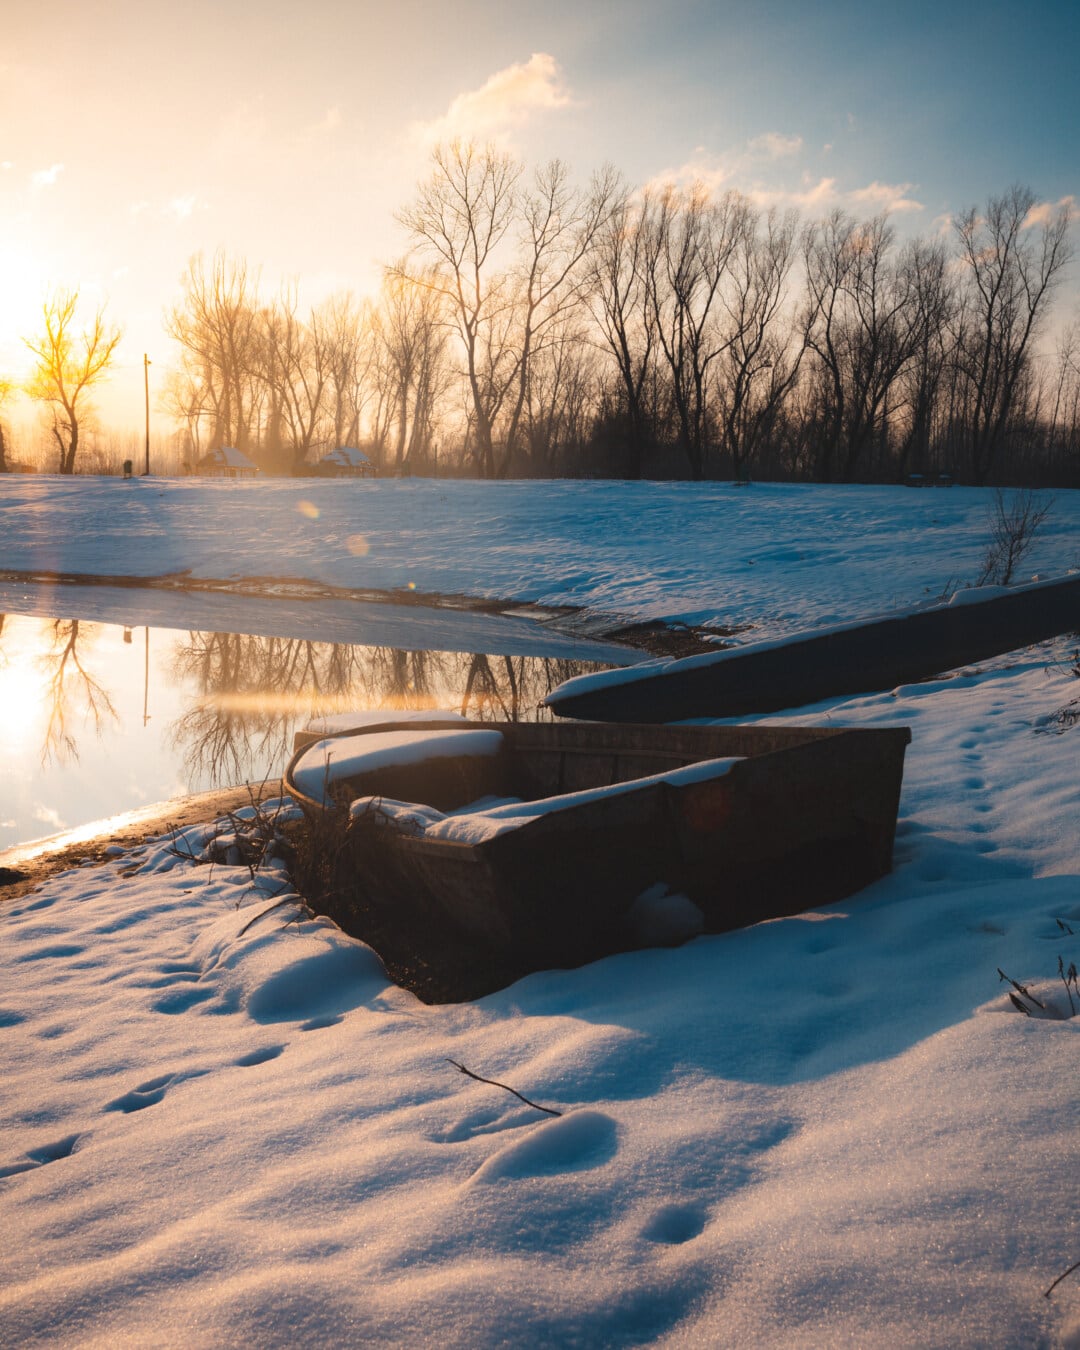 Winter, Sonnenaufgang, Boot, am See, schneebedeckt, Wasser, Ufer, Sonnenuntergang, See, Schnee